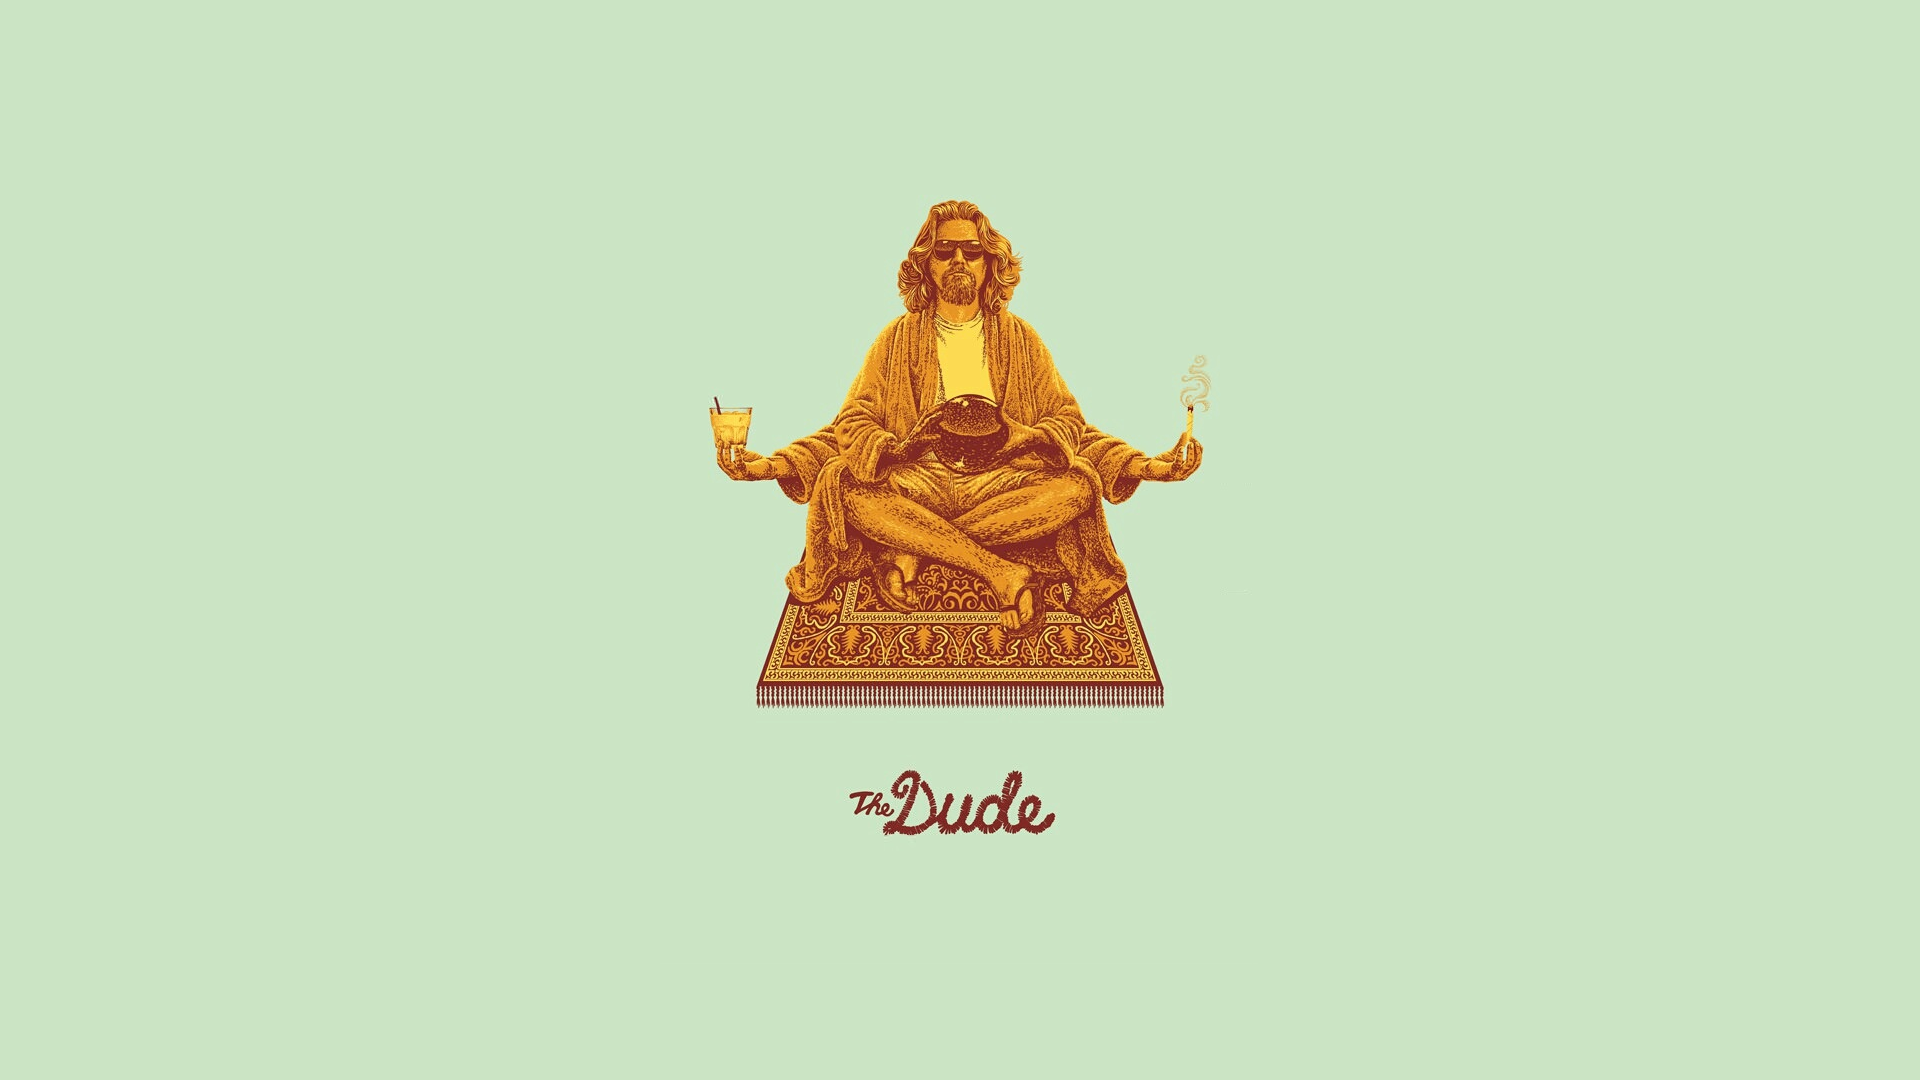 Free download The Dude wallpaper Big Lebowski The Dude meditating